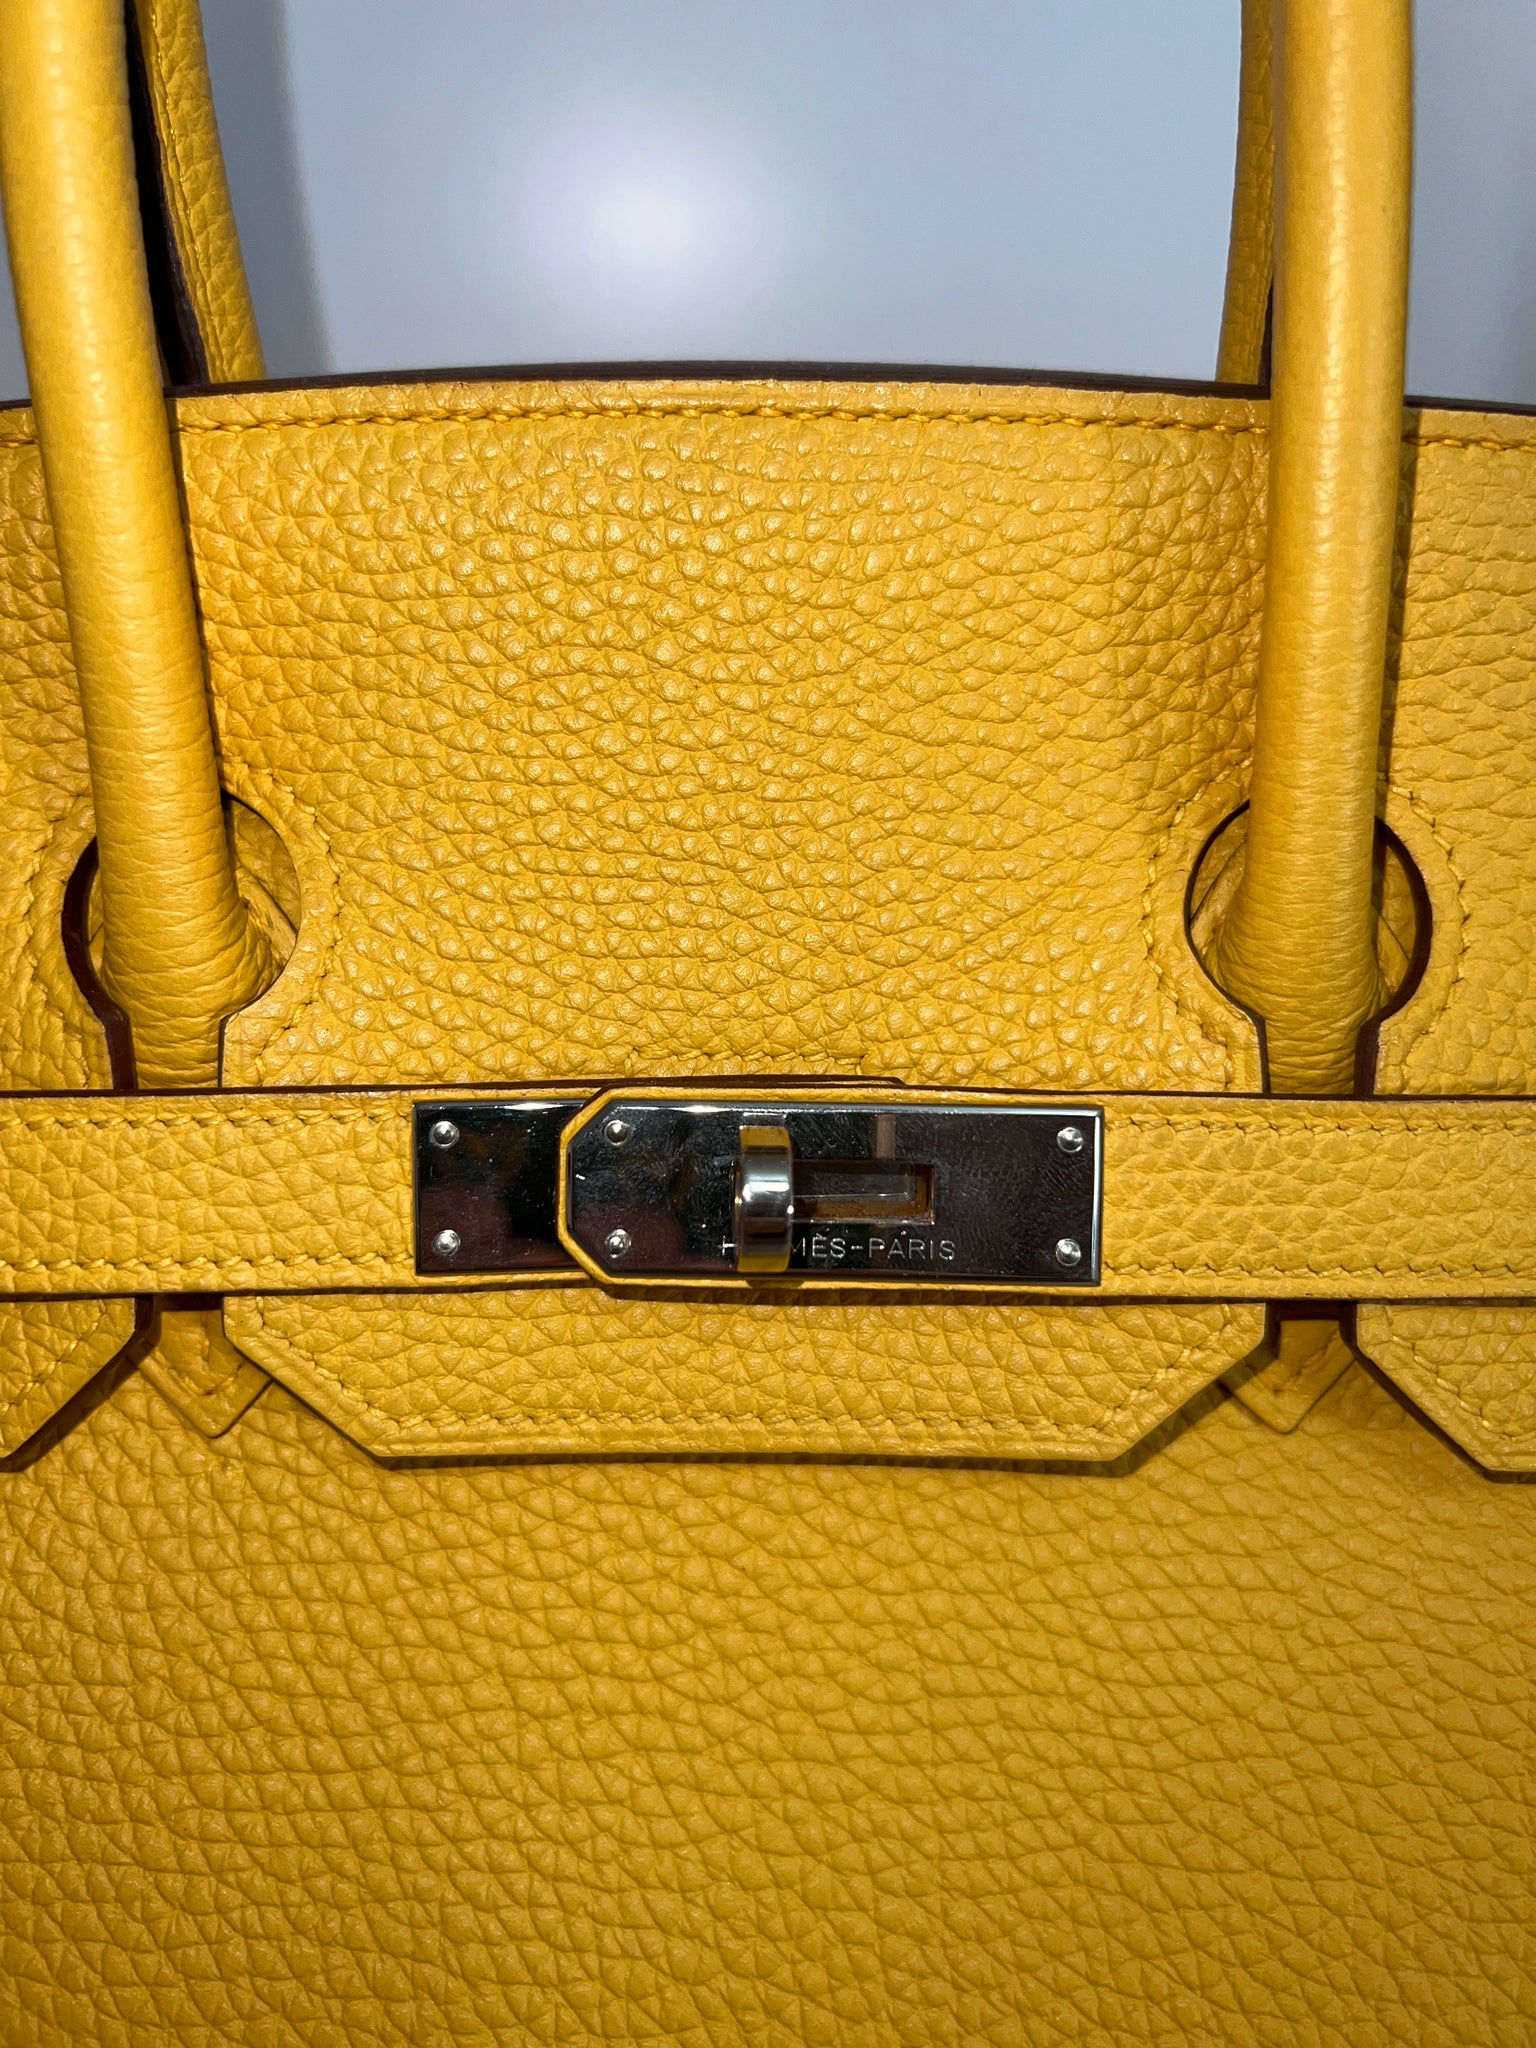 Hermes 35cm Soleil Clemence Leather Birkin Bag with Palladium, Lot #58048